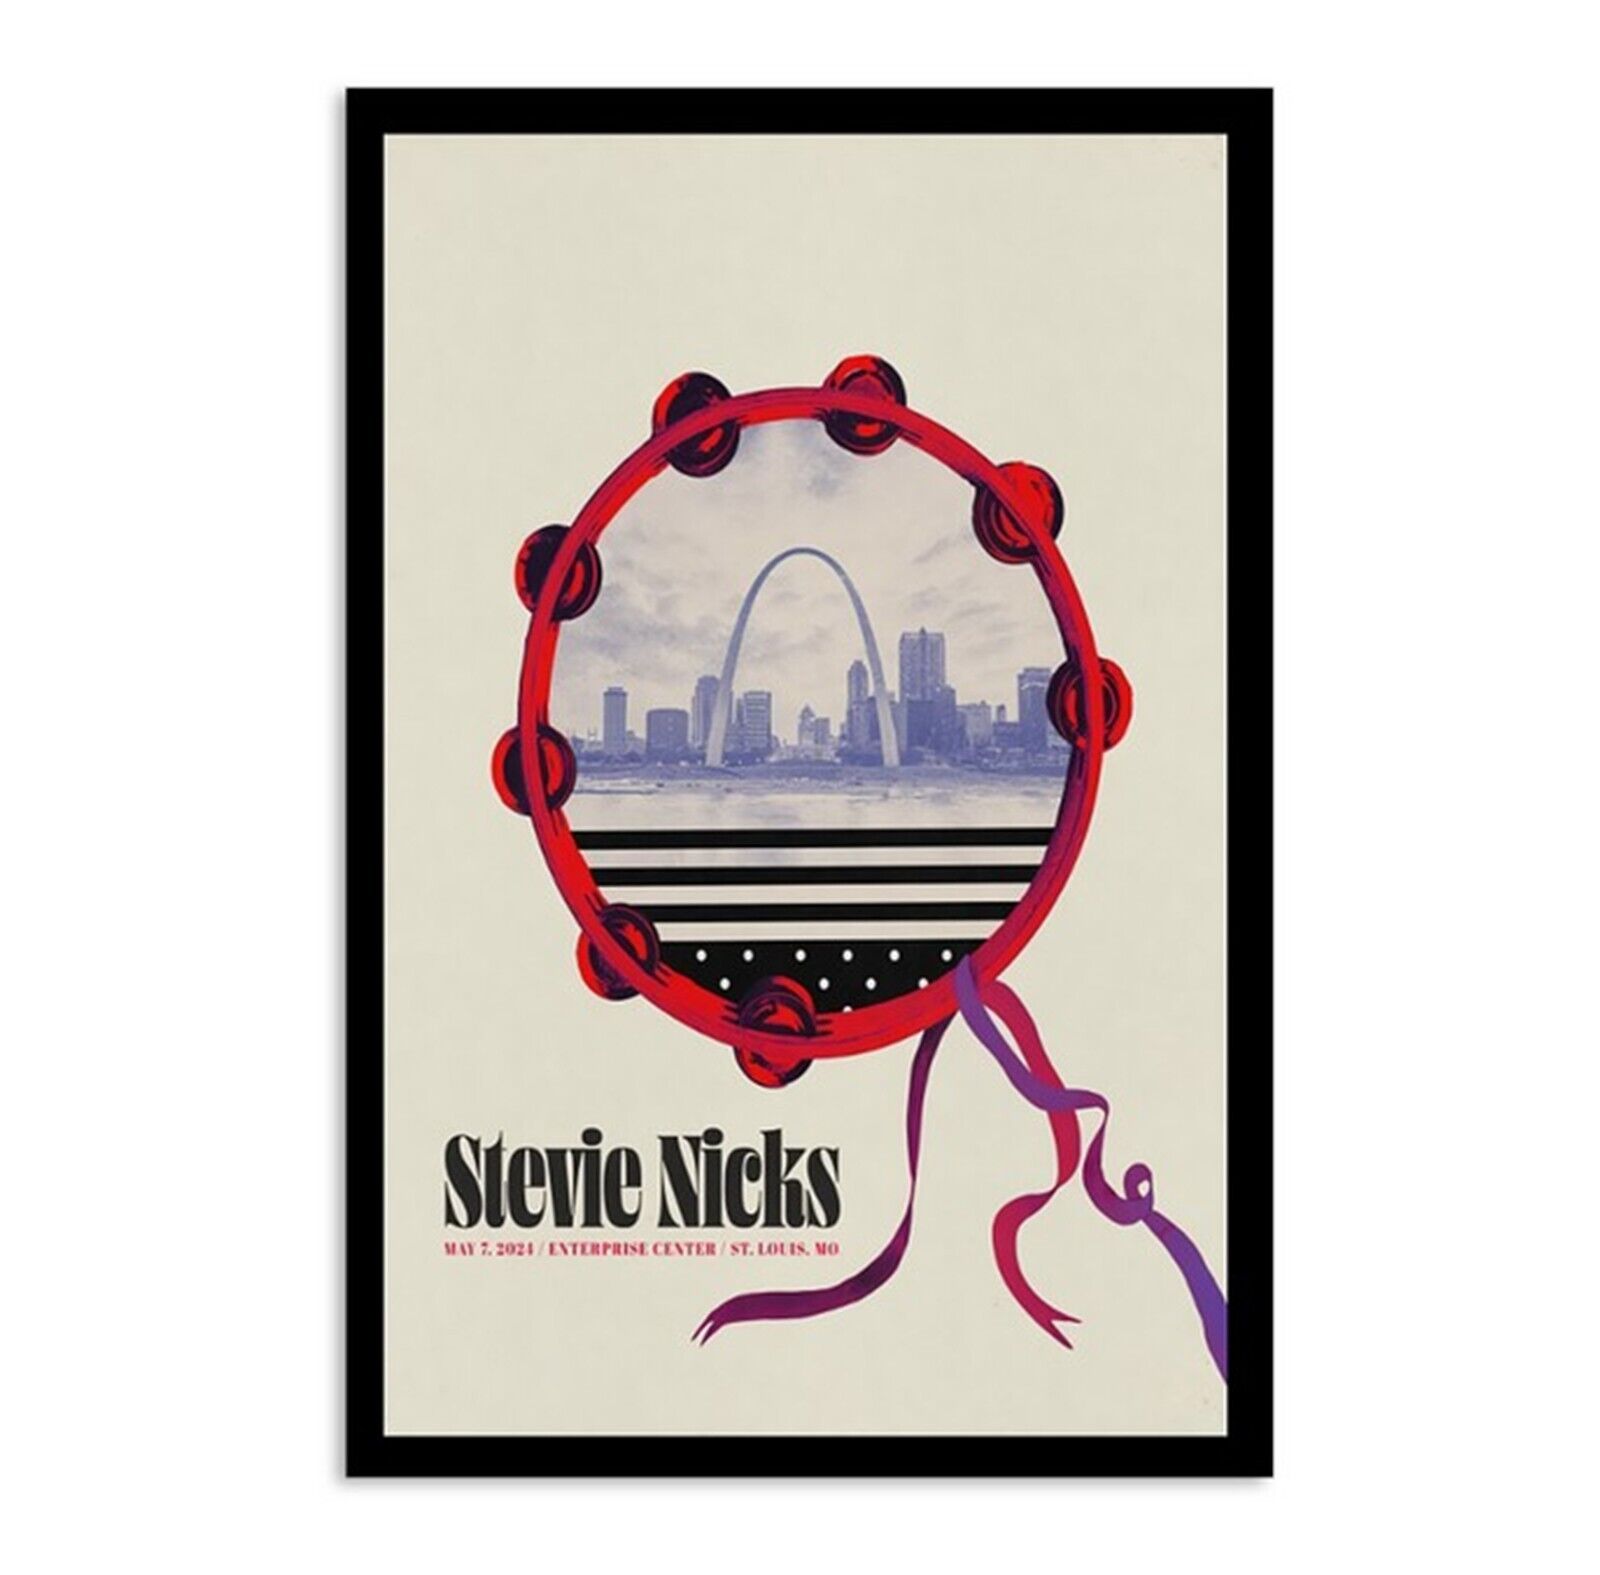 Stevie Nicks May 7, 2024 Enterprise Center St. Louis, MO Poster